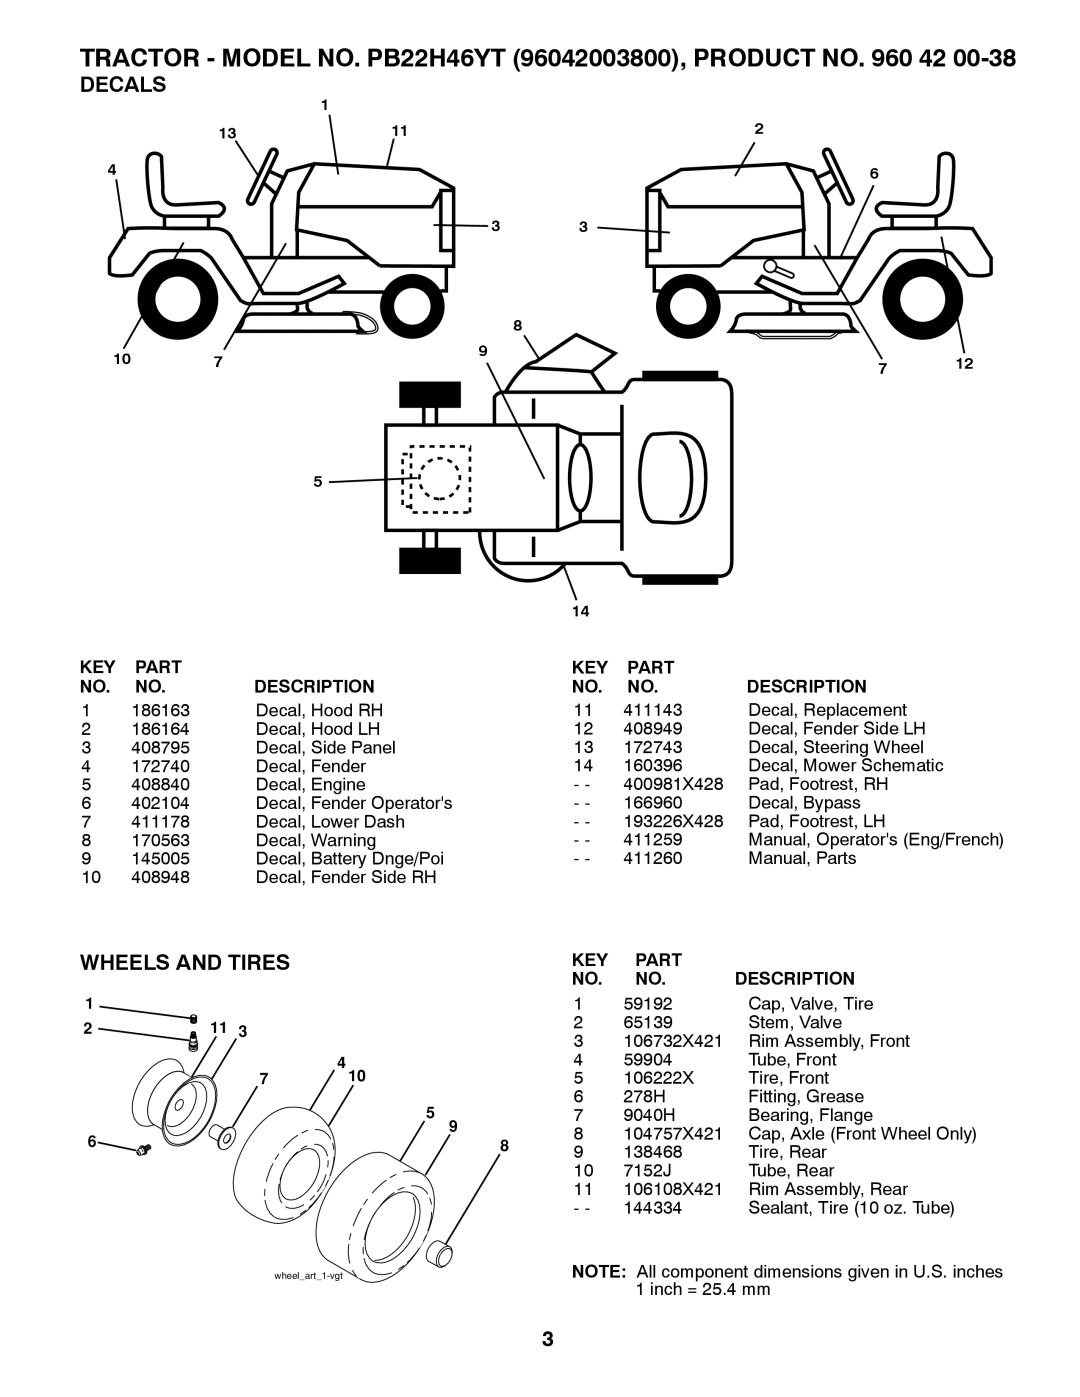 Poulan manual Decals, Wheels And Tires, TRACTOR - MODEL NO. PB22H46YT 96042003800, PRODUCT NO. 960 42, Part, Description 